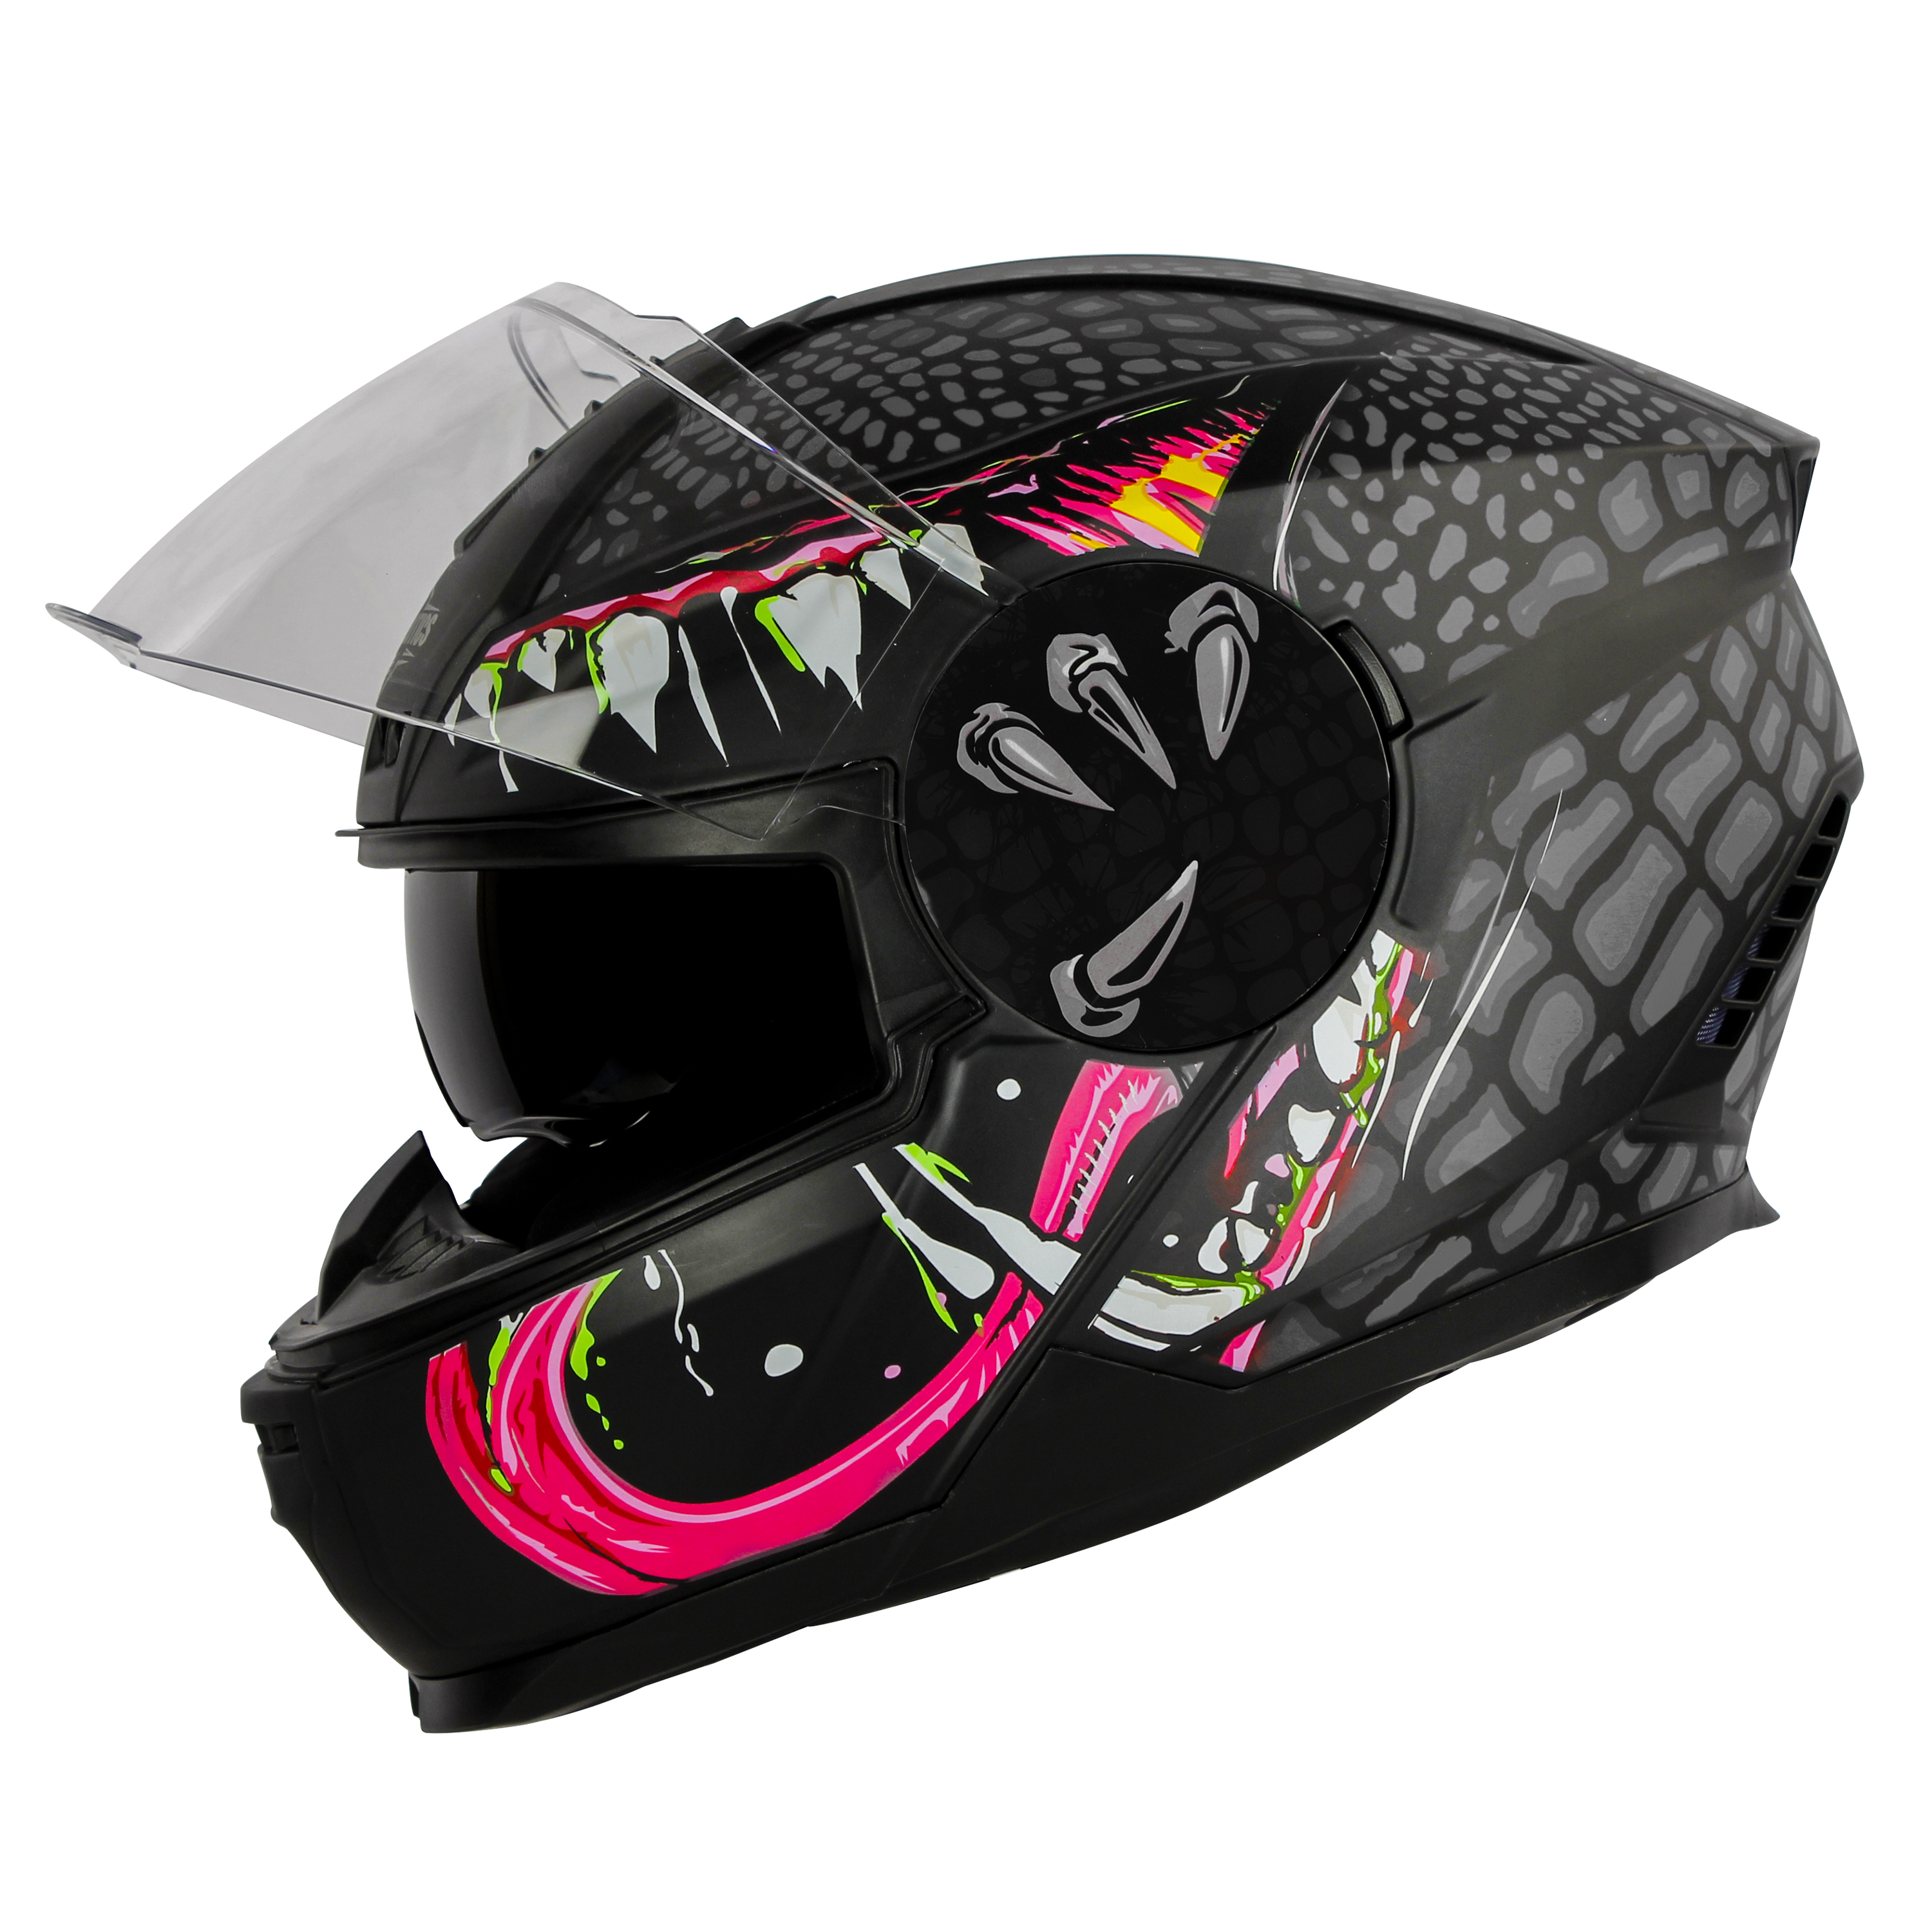 Steelbird SBH-40 Devil ISI Certified Full Face Helmet for Men and Women with Inner Smoke Sun Shield (Glossy Black Grey)